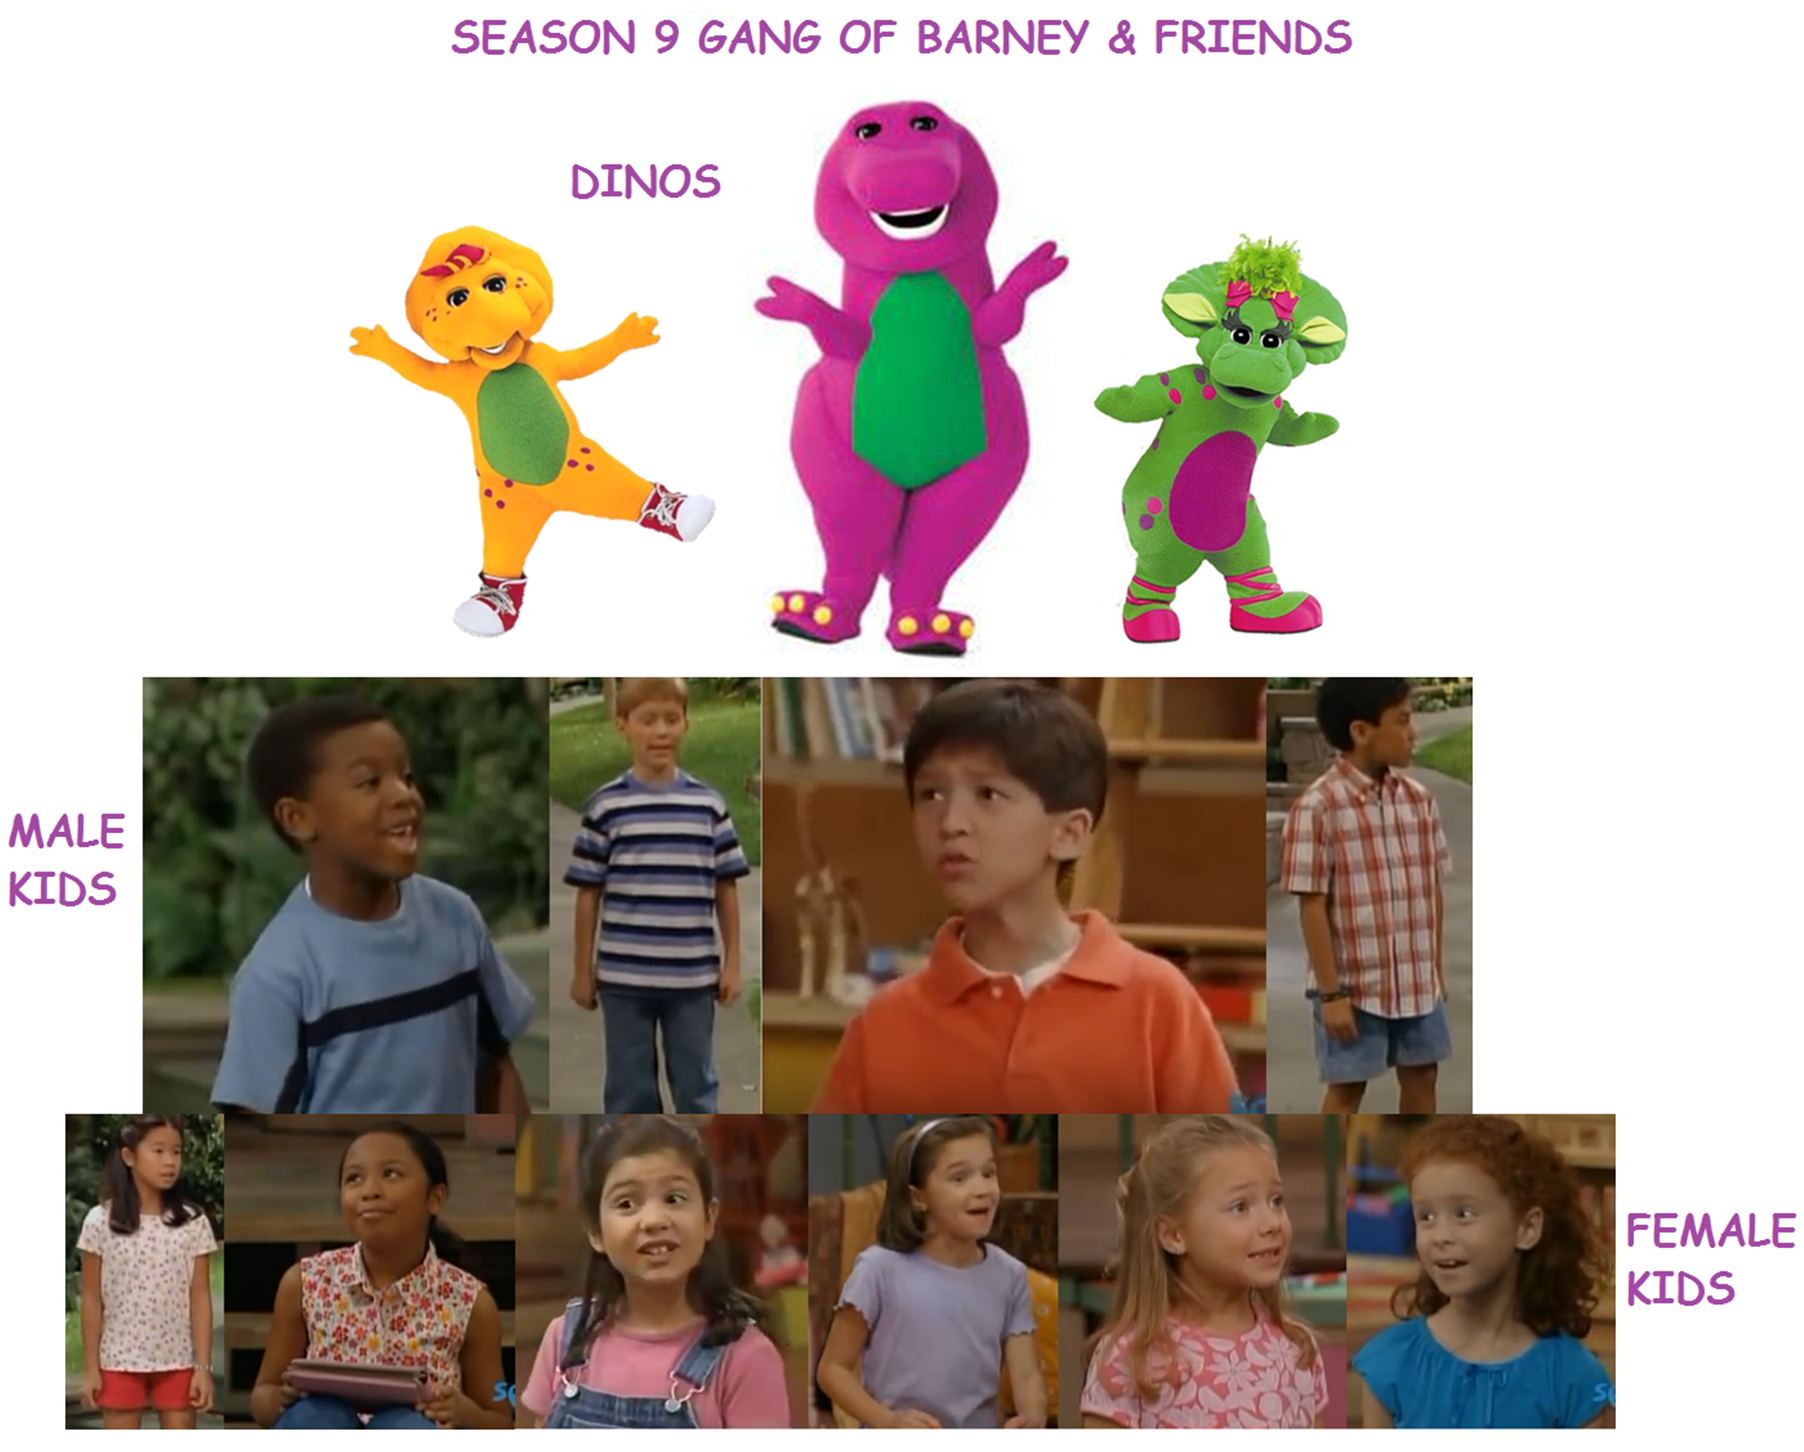 barney and friends season 9